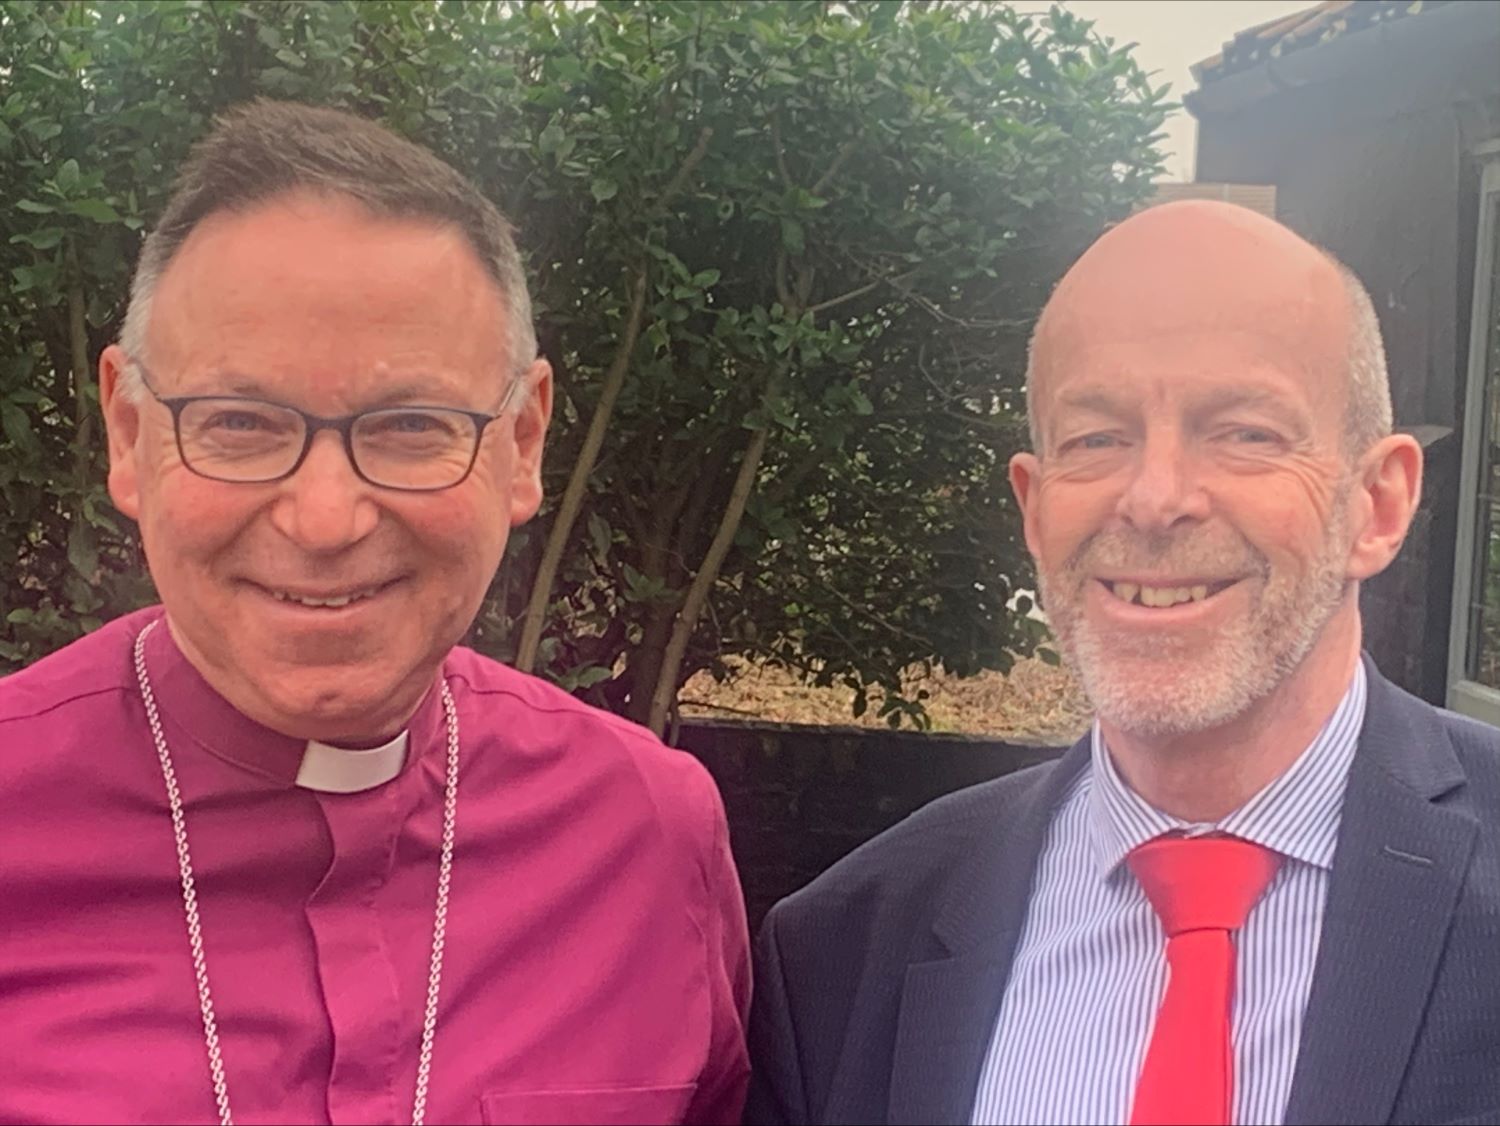 Bishop Ian and Paul Dunning